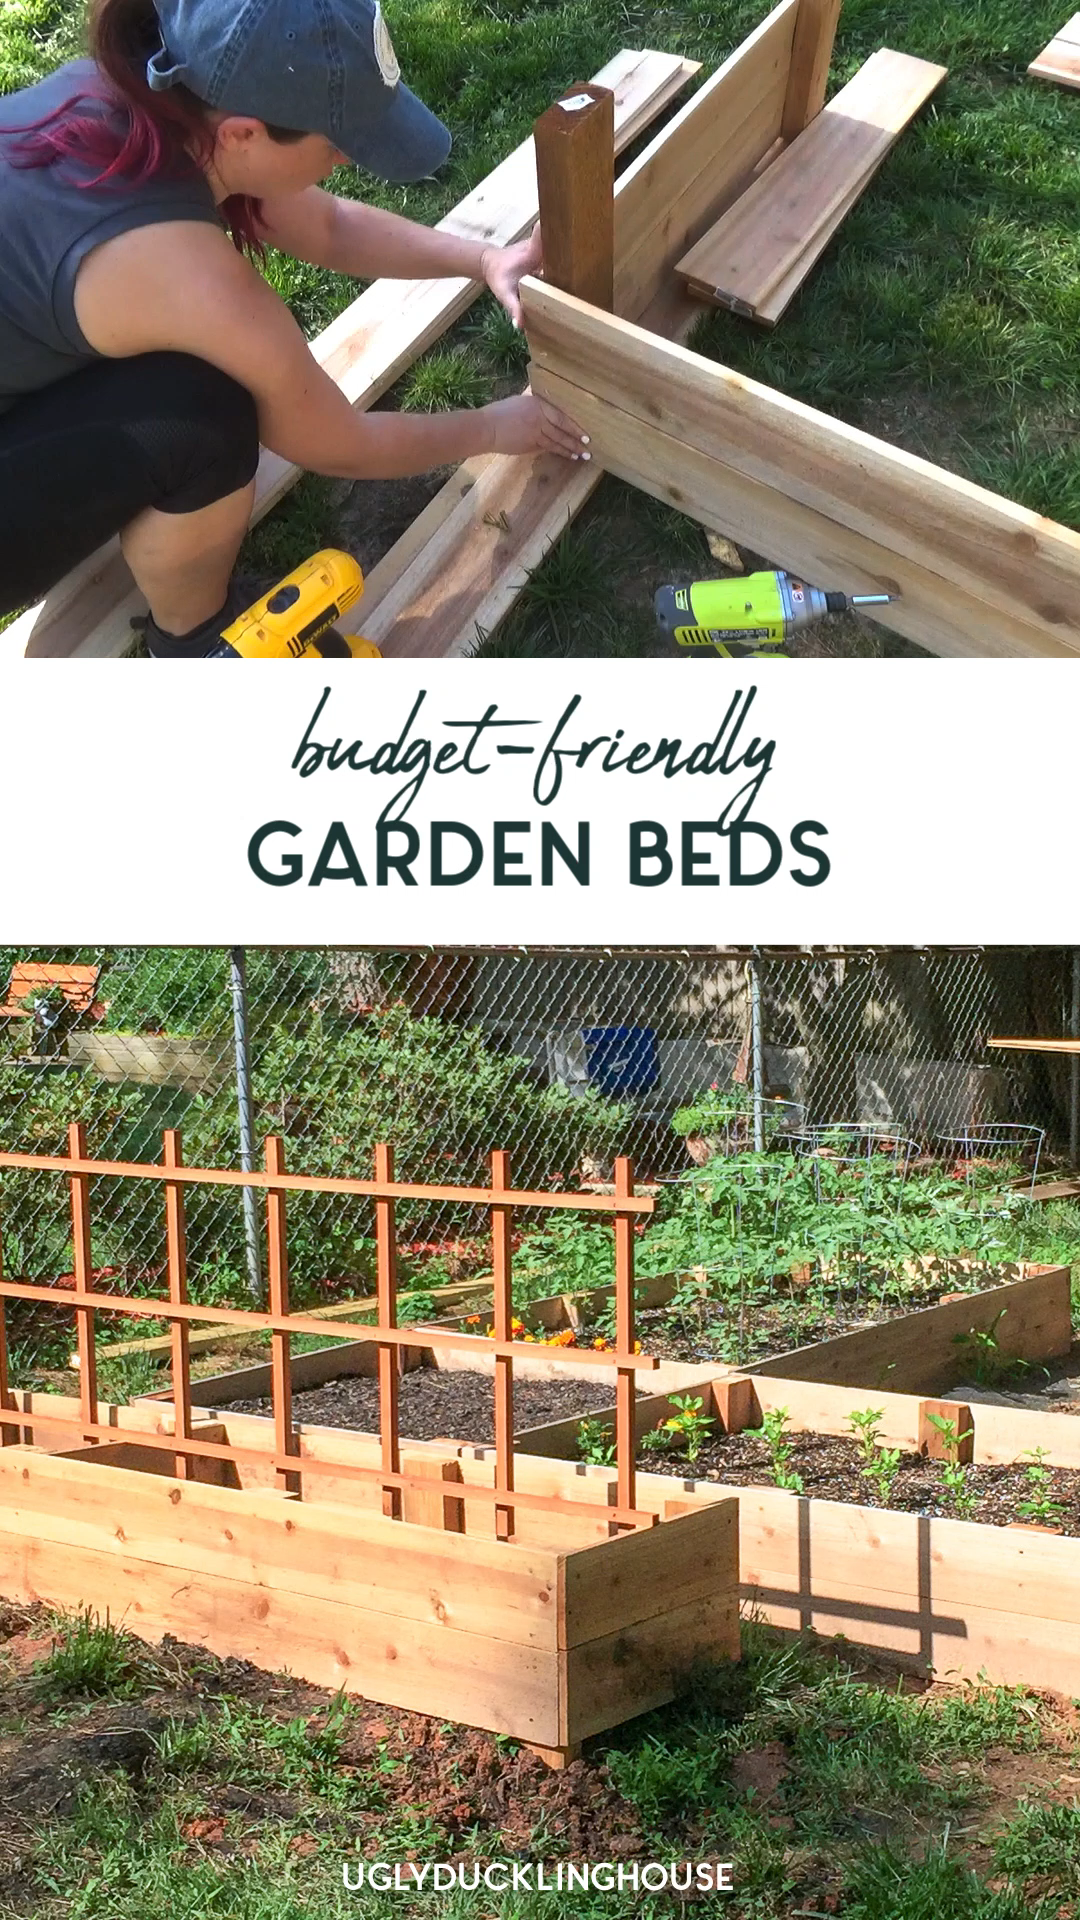 DIY Budget-Friendly Garden Beds - DIY Budget-Friendly Garden Beds -   diy Garden cheap